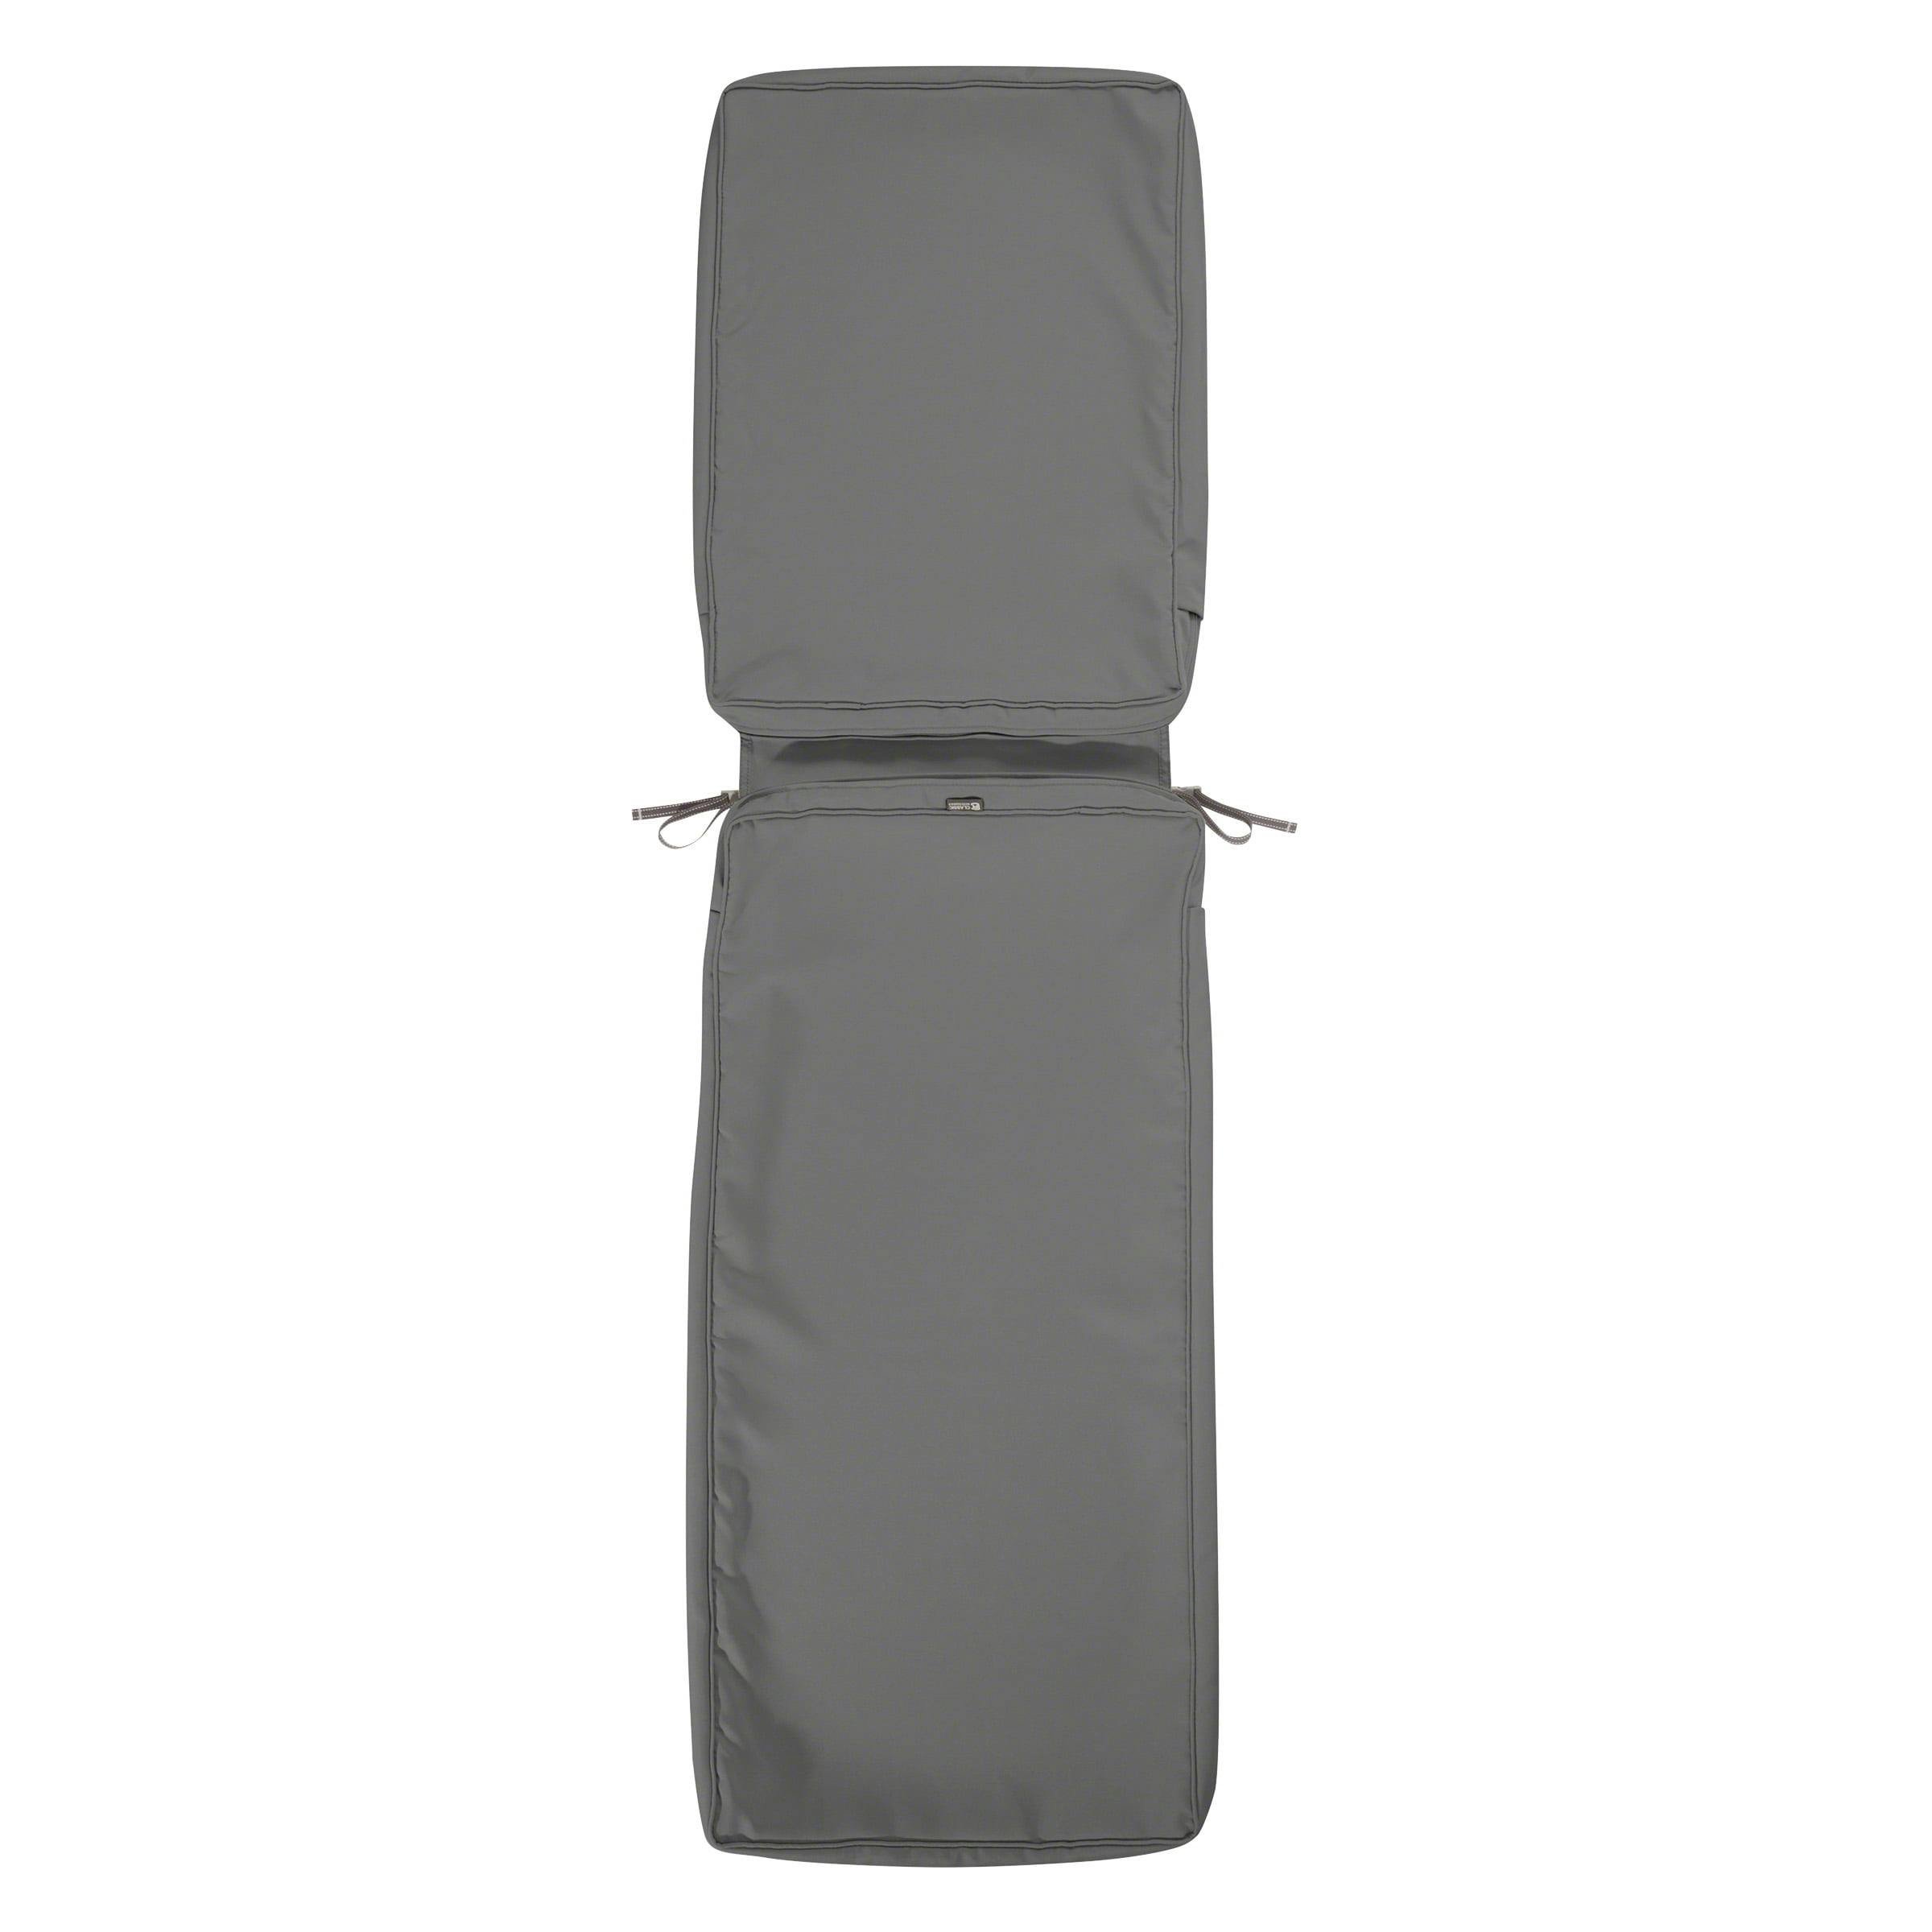 Montlake FadeSafe Light Charcoal Grey Patio Chaise Lounge Cushion Slip Cover, 72"L x 21"W